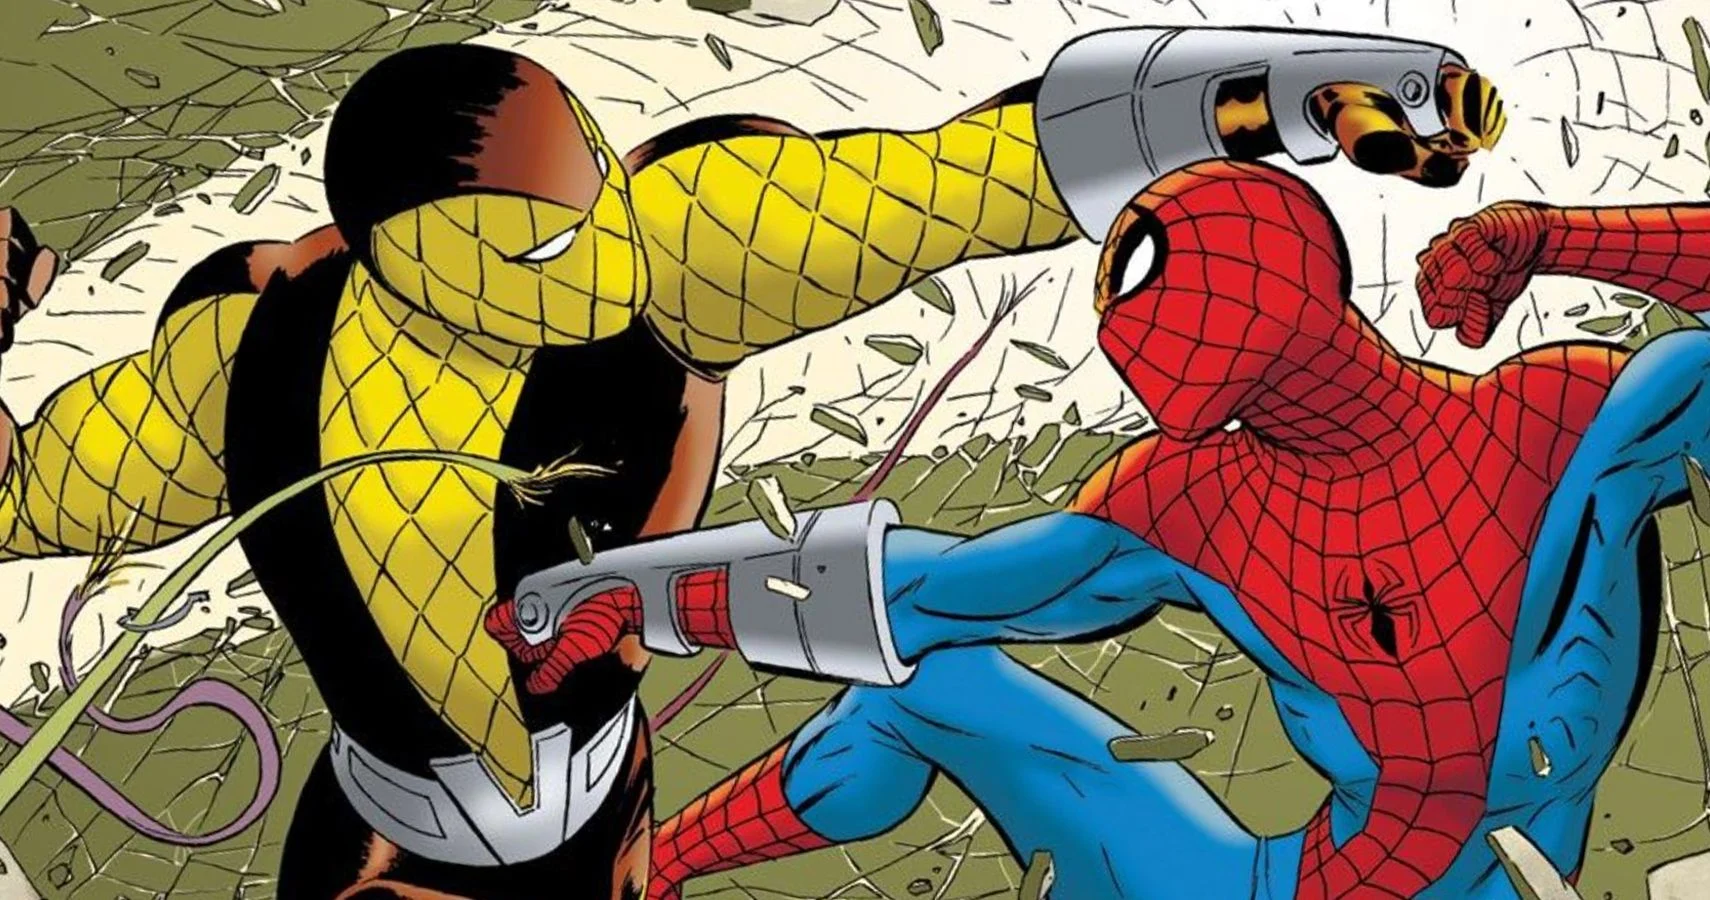 Spider-Man Almost Kills Shocker